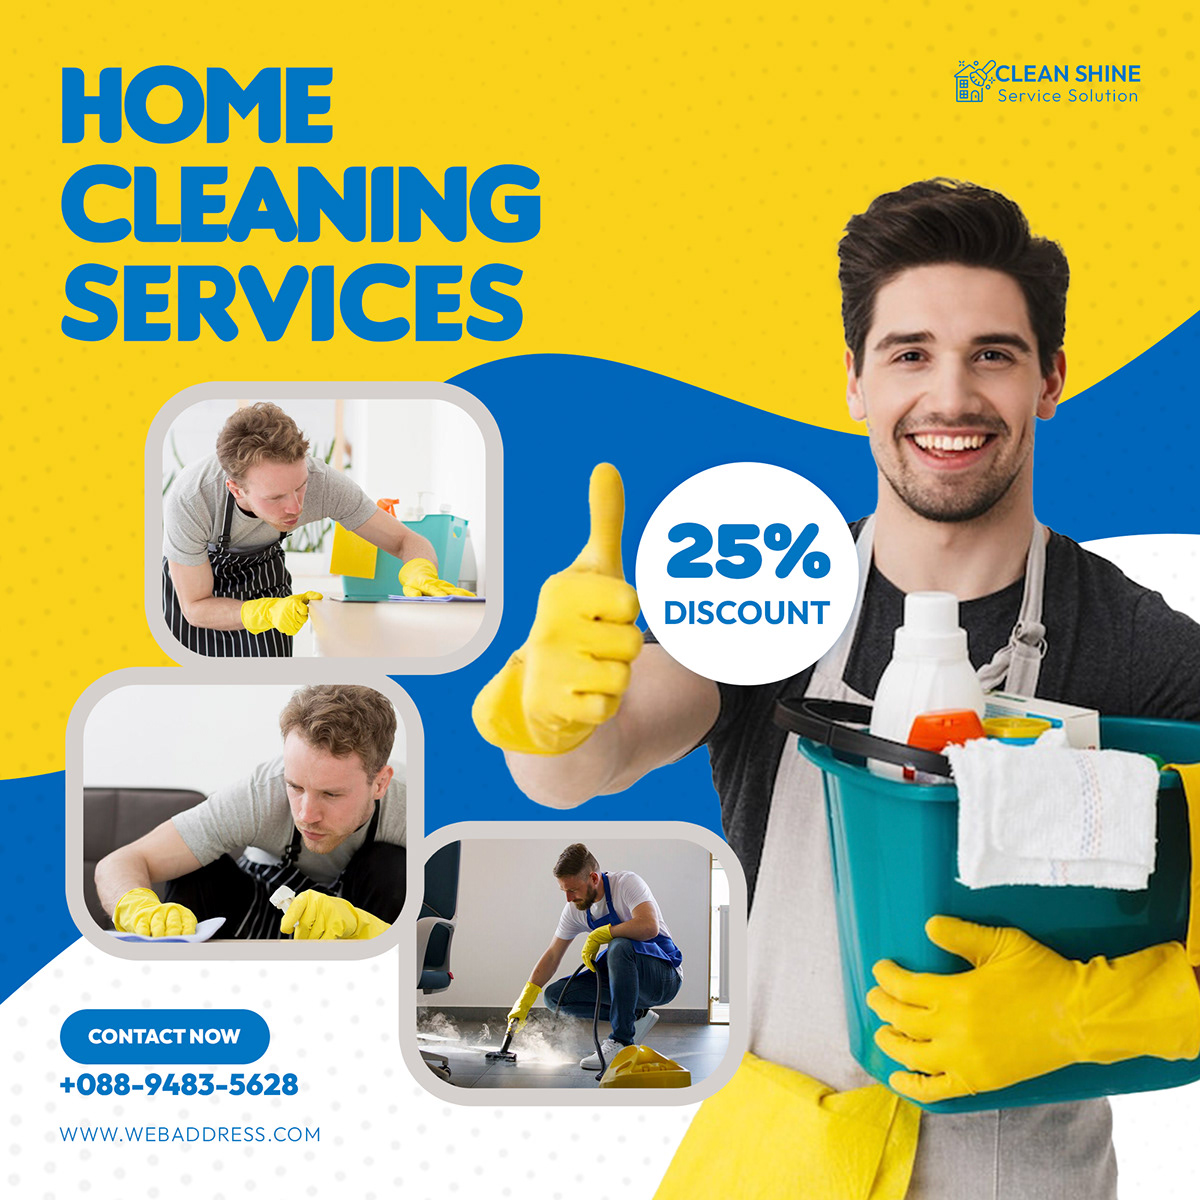 Cleaning service social media post banner design